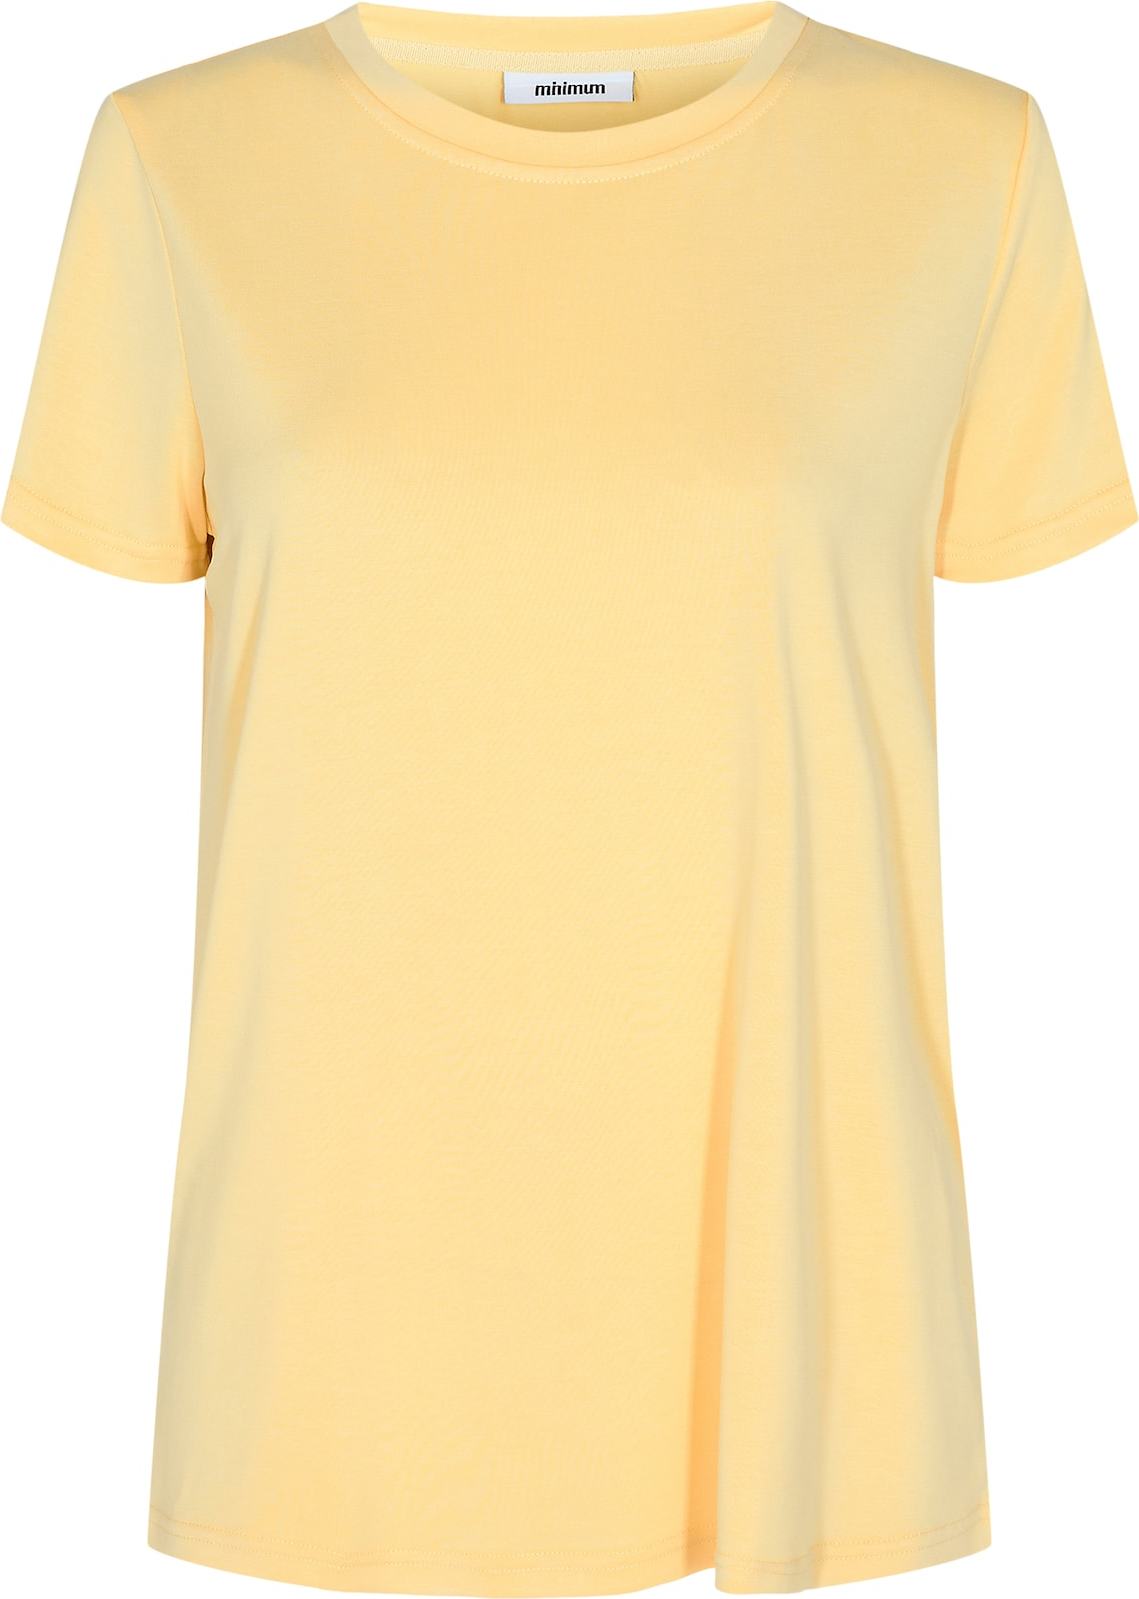 Tričko 'Rynih' Minimum pastelově žlutá